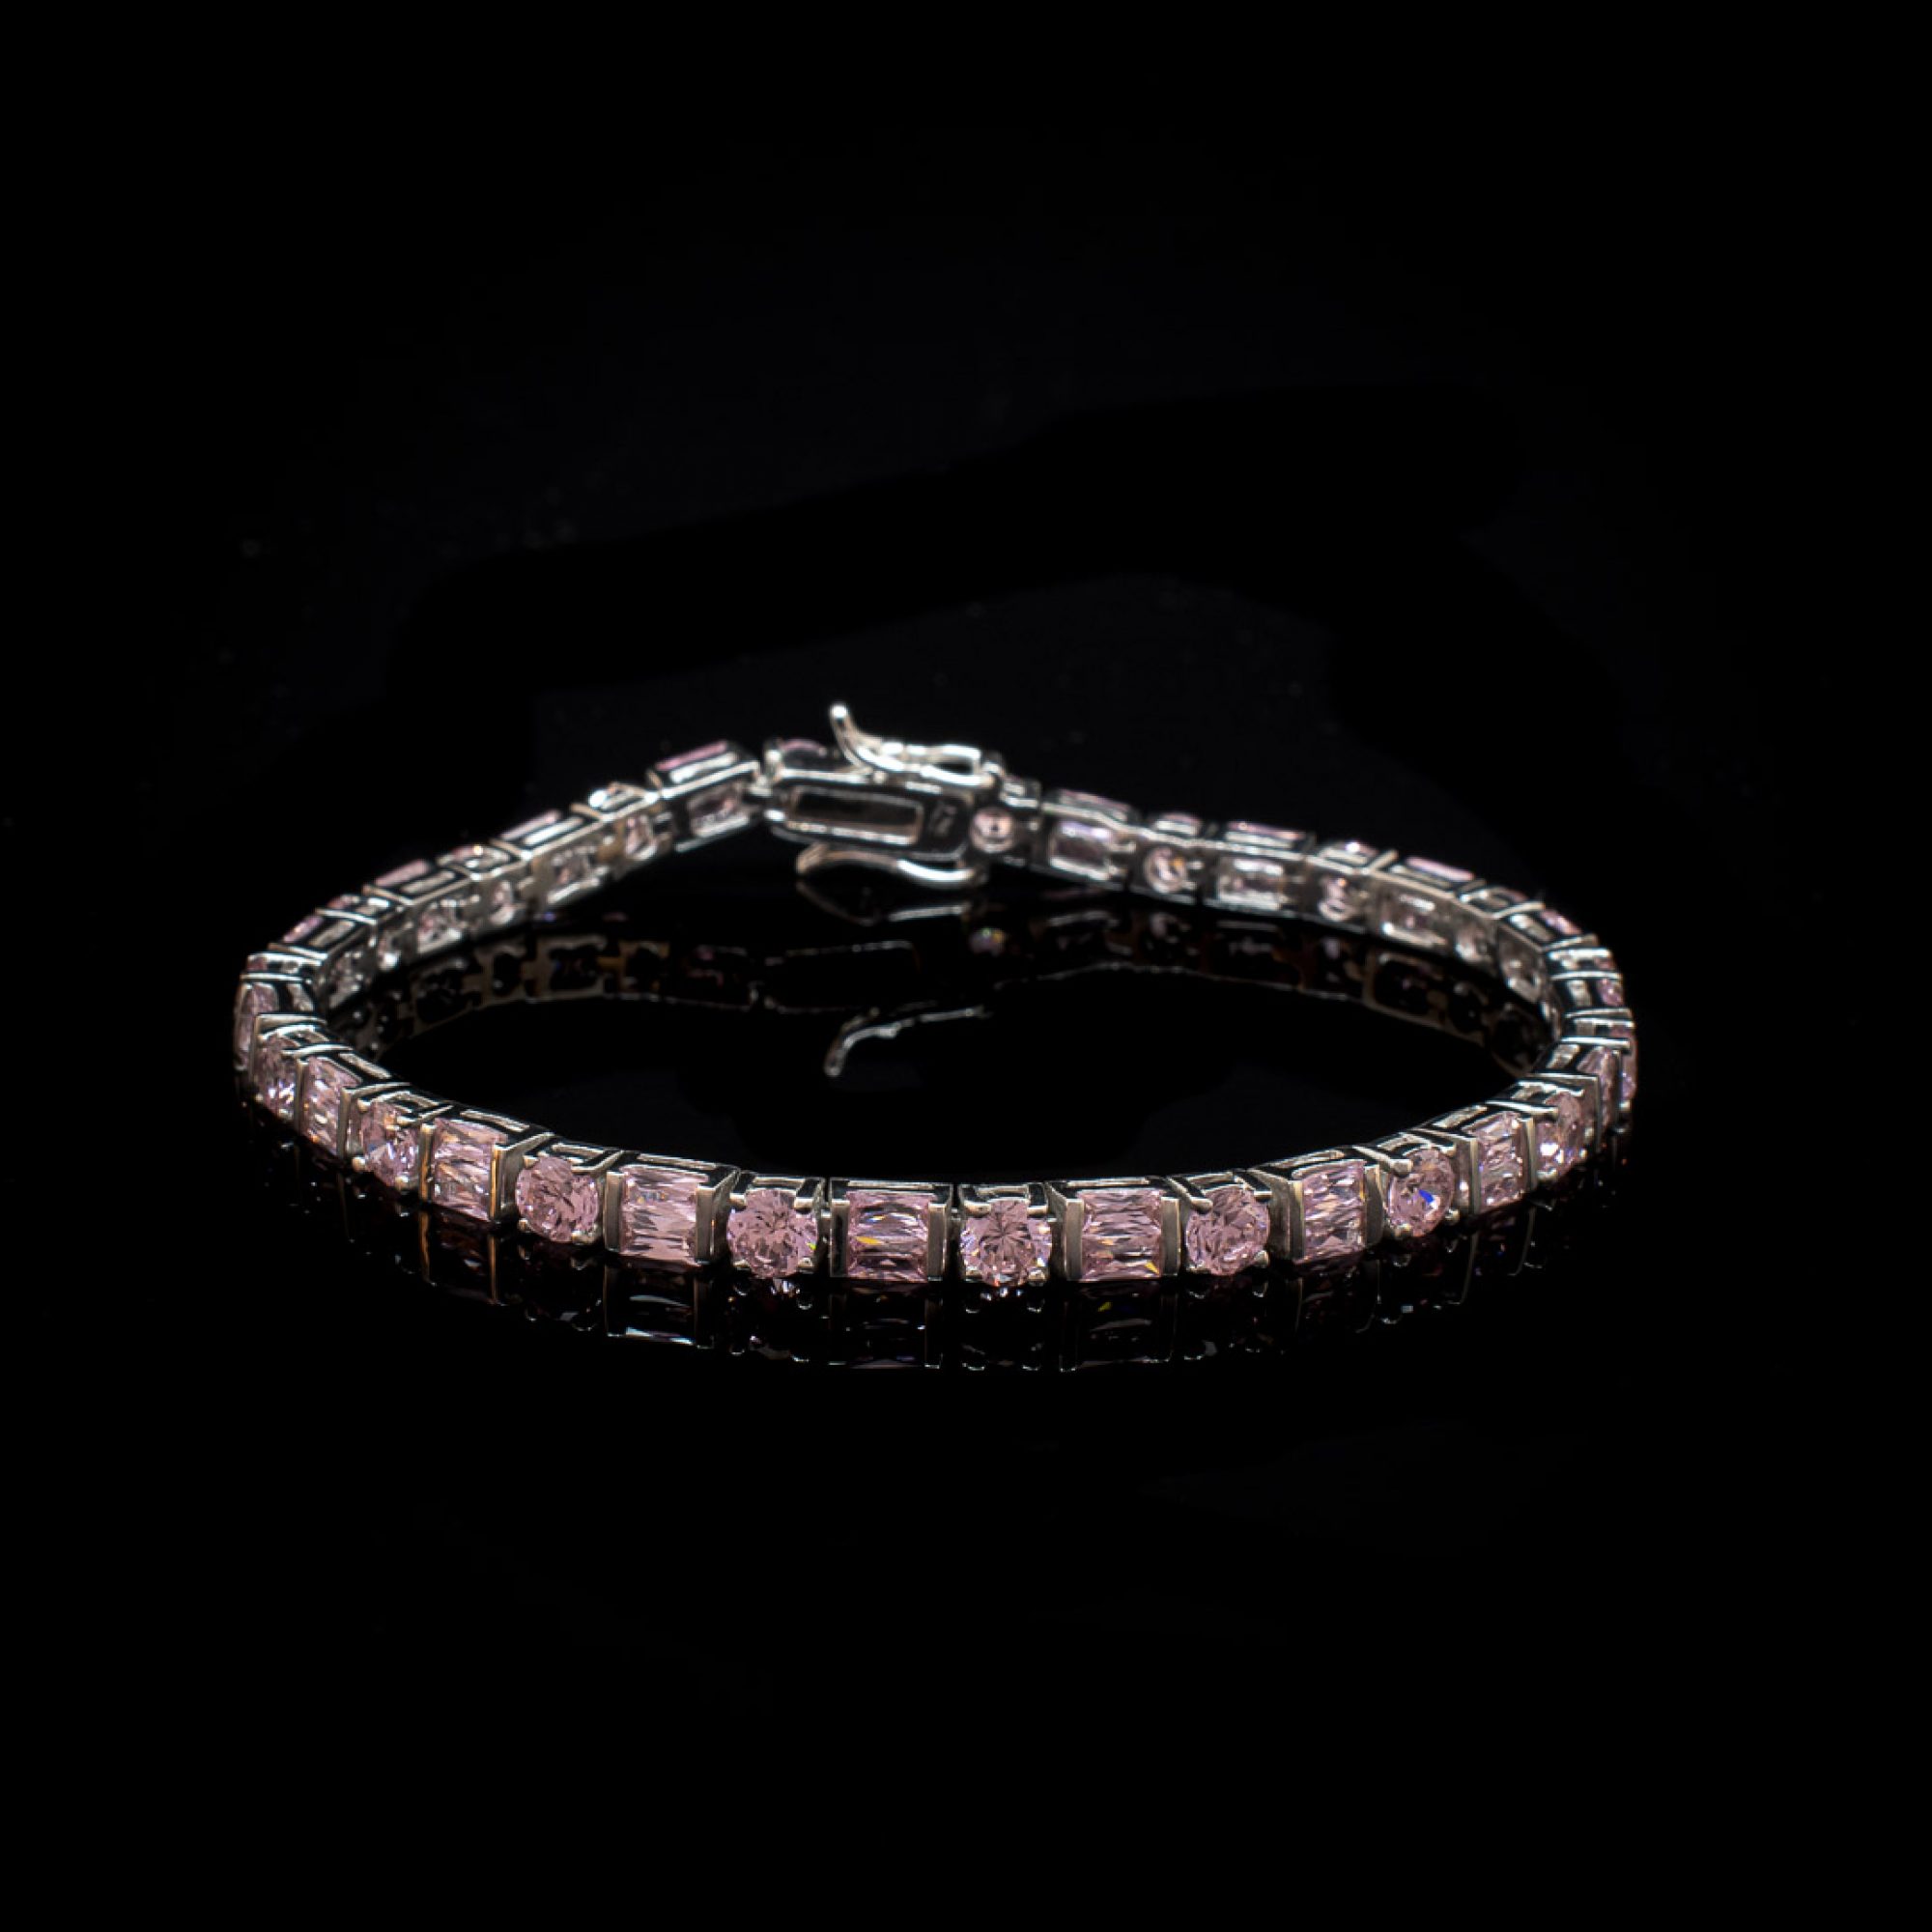 Tennis bracelet with pink quartz stones